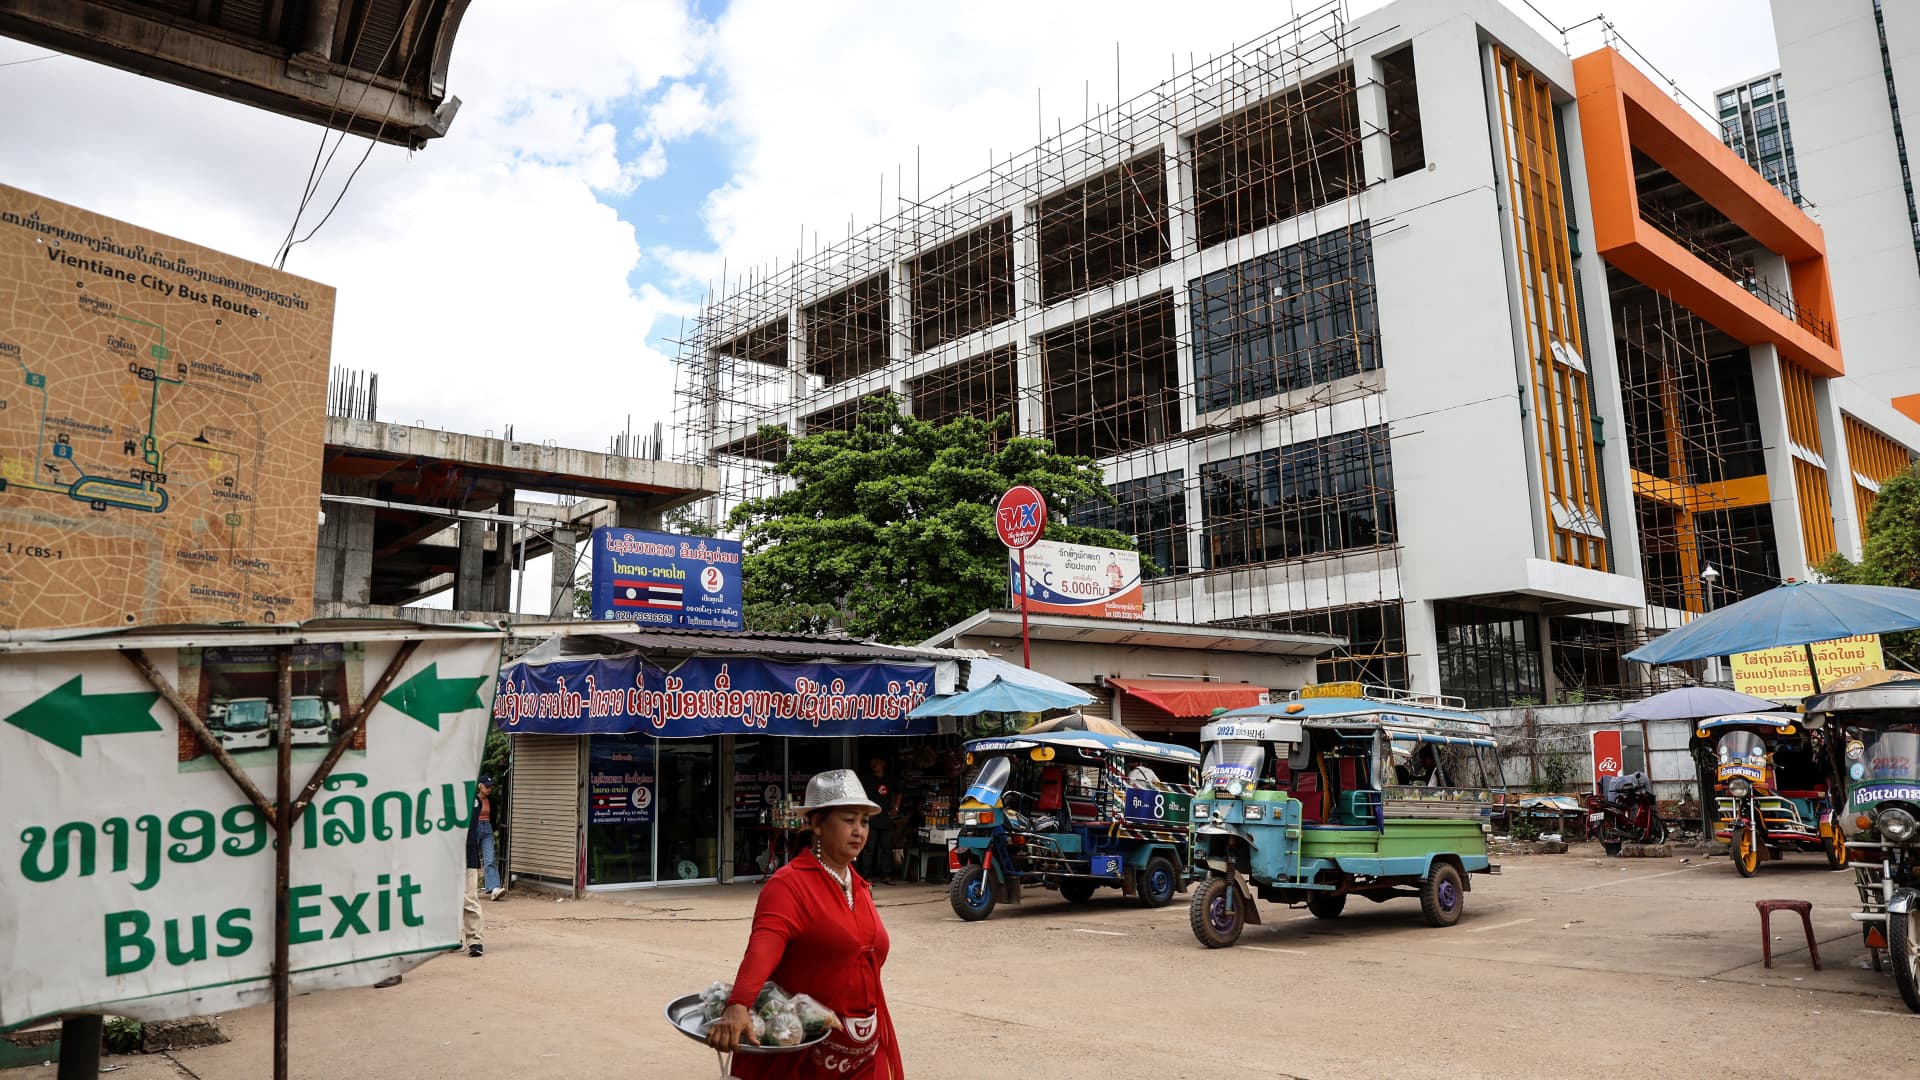 Laos is spiraling toward a debt crisis as China looms large